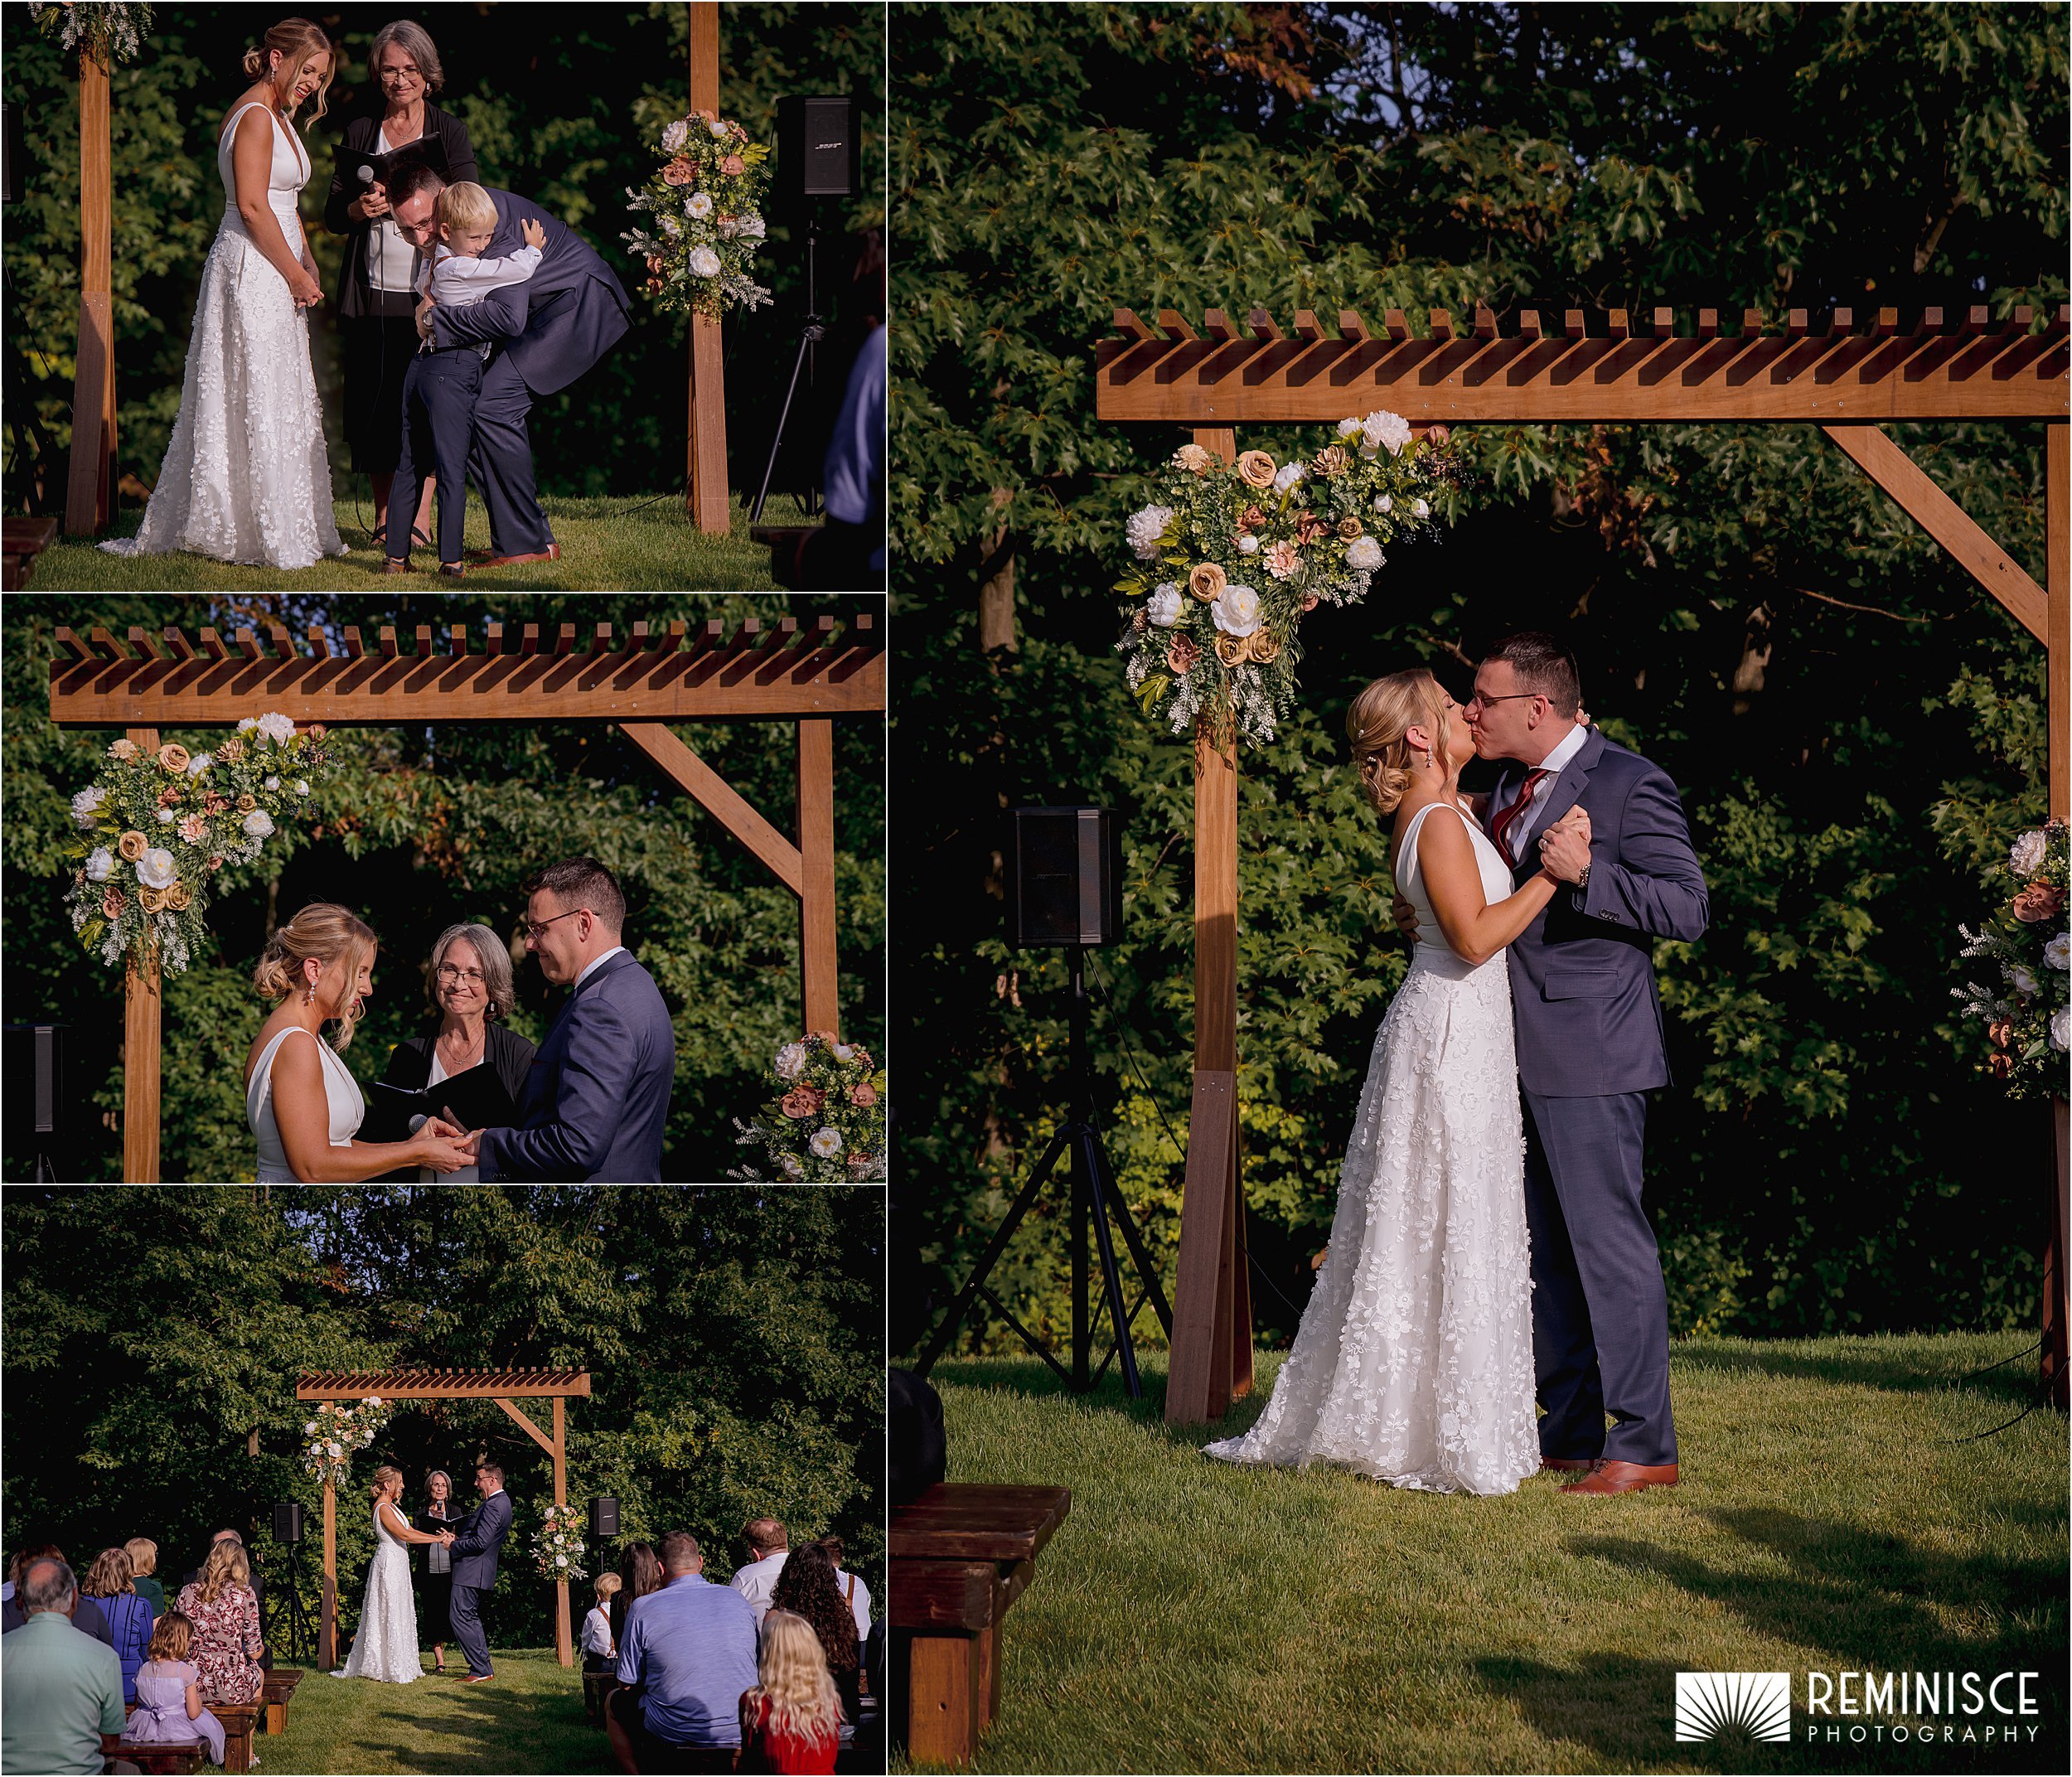 11-intimate-candid-backyard-summer-wedding-day.JPG